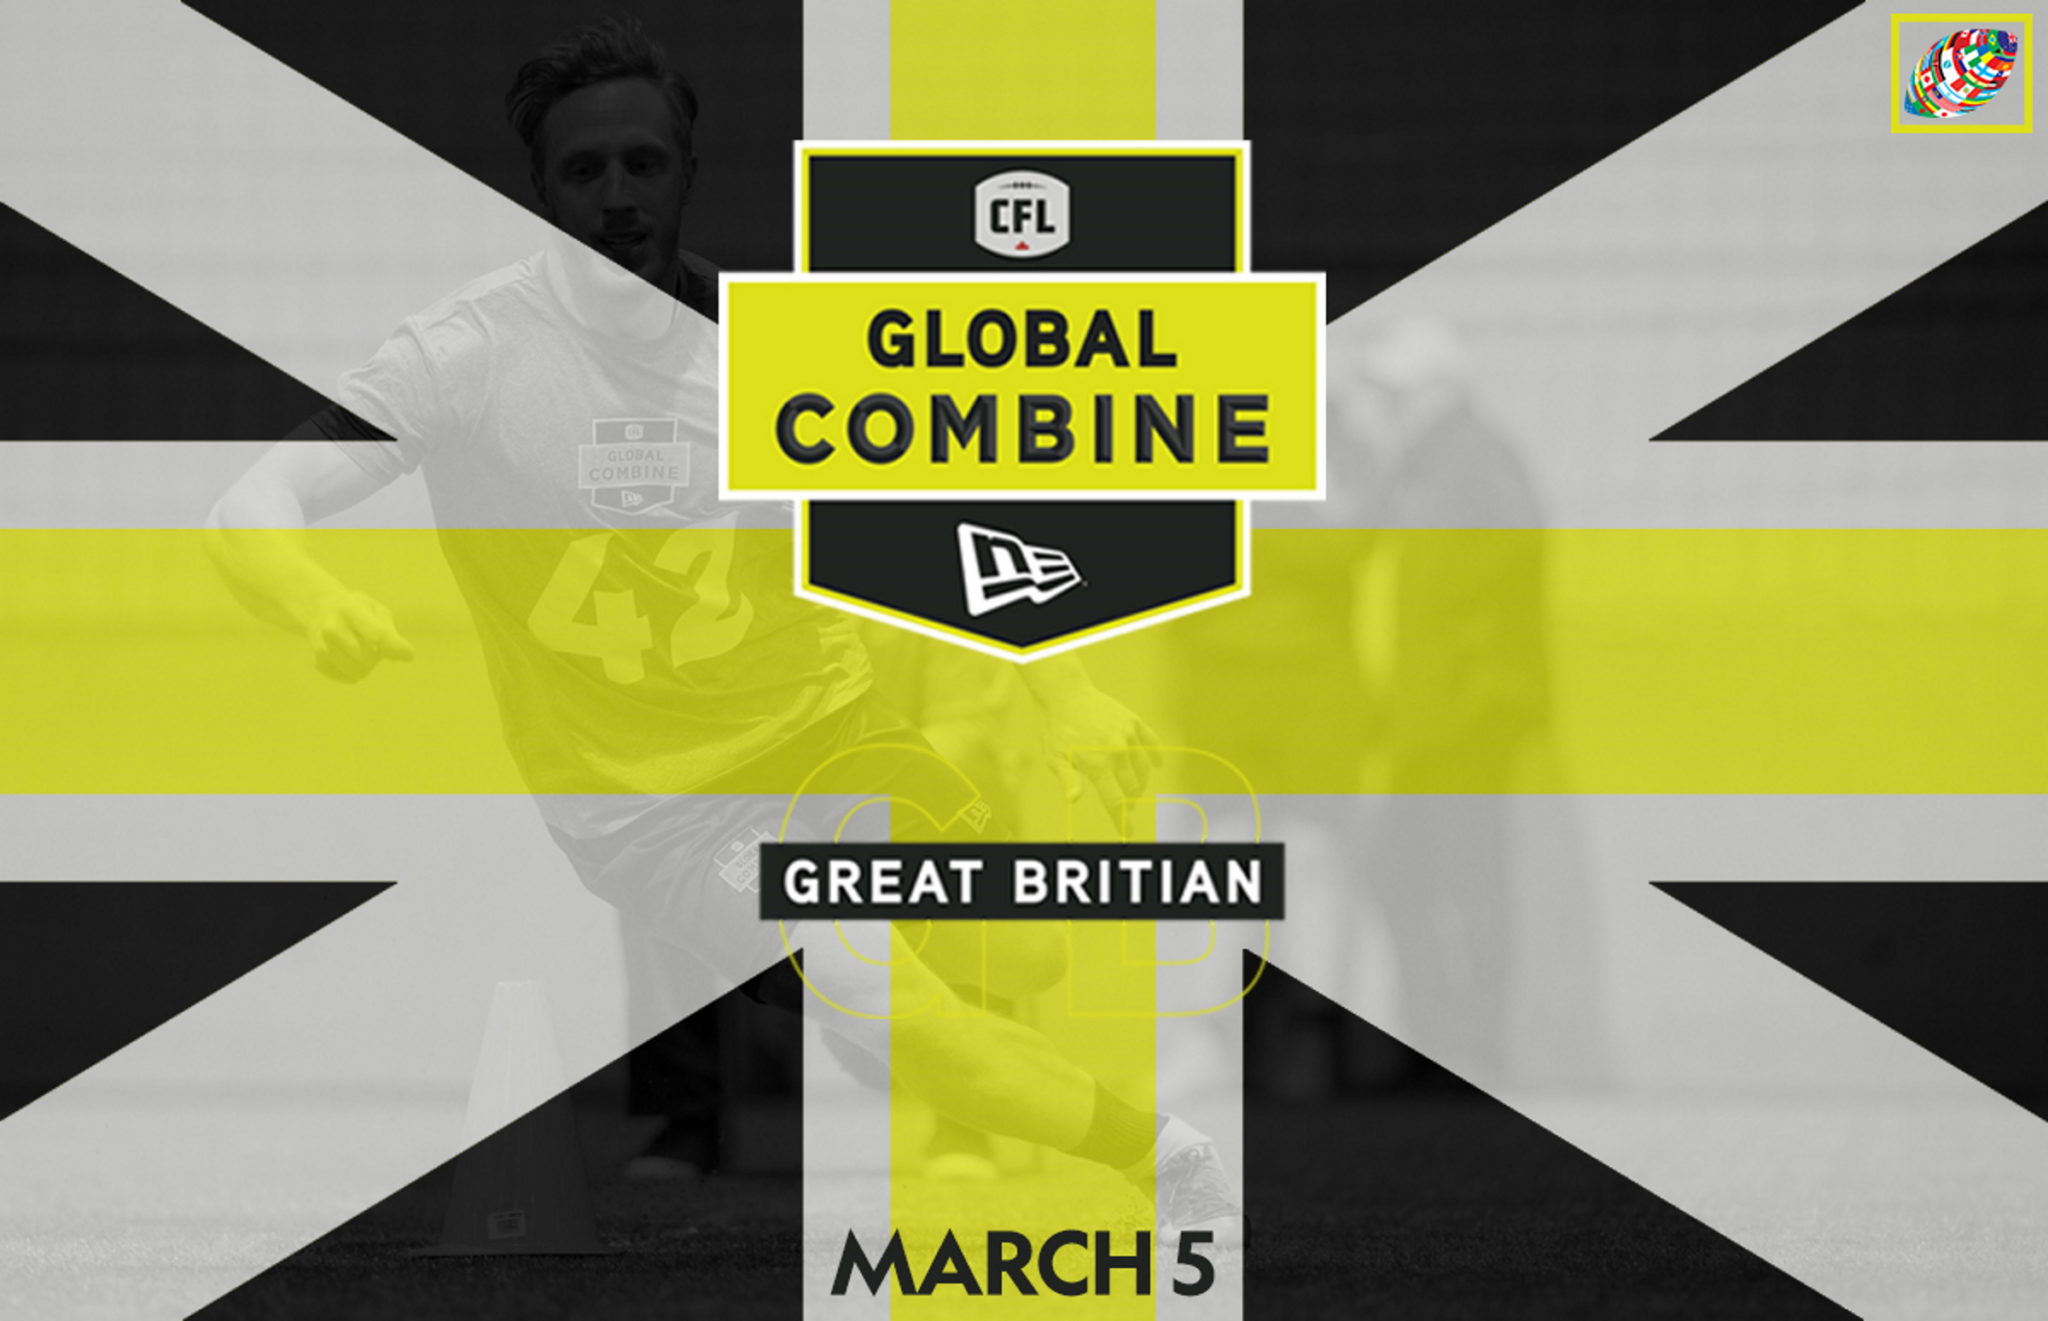 CFL Global Combine in Great Britain kicks off